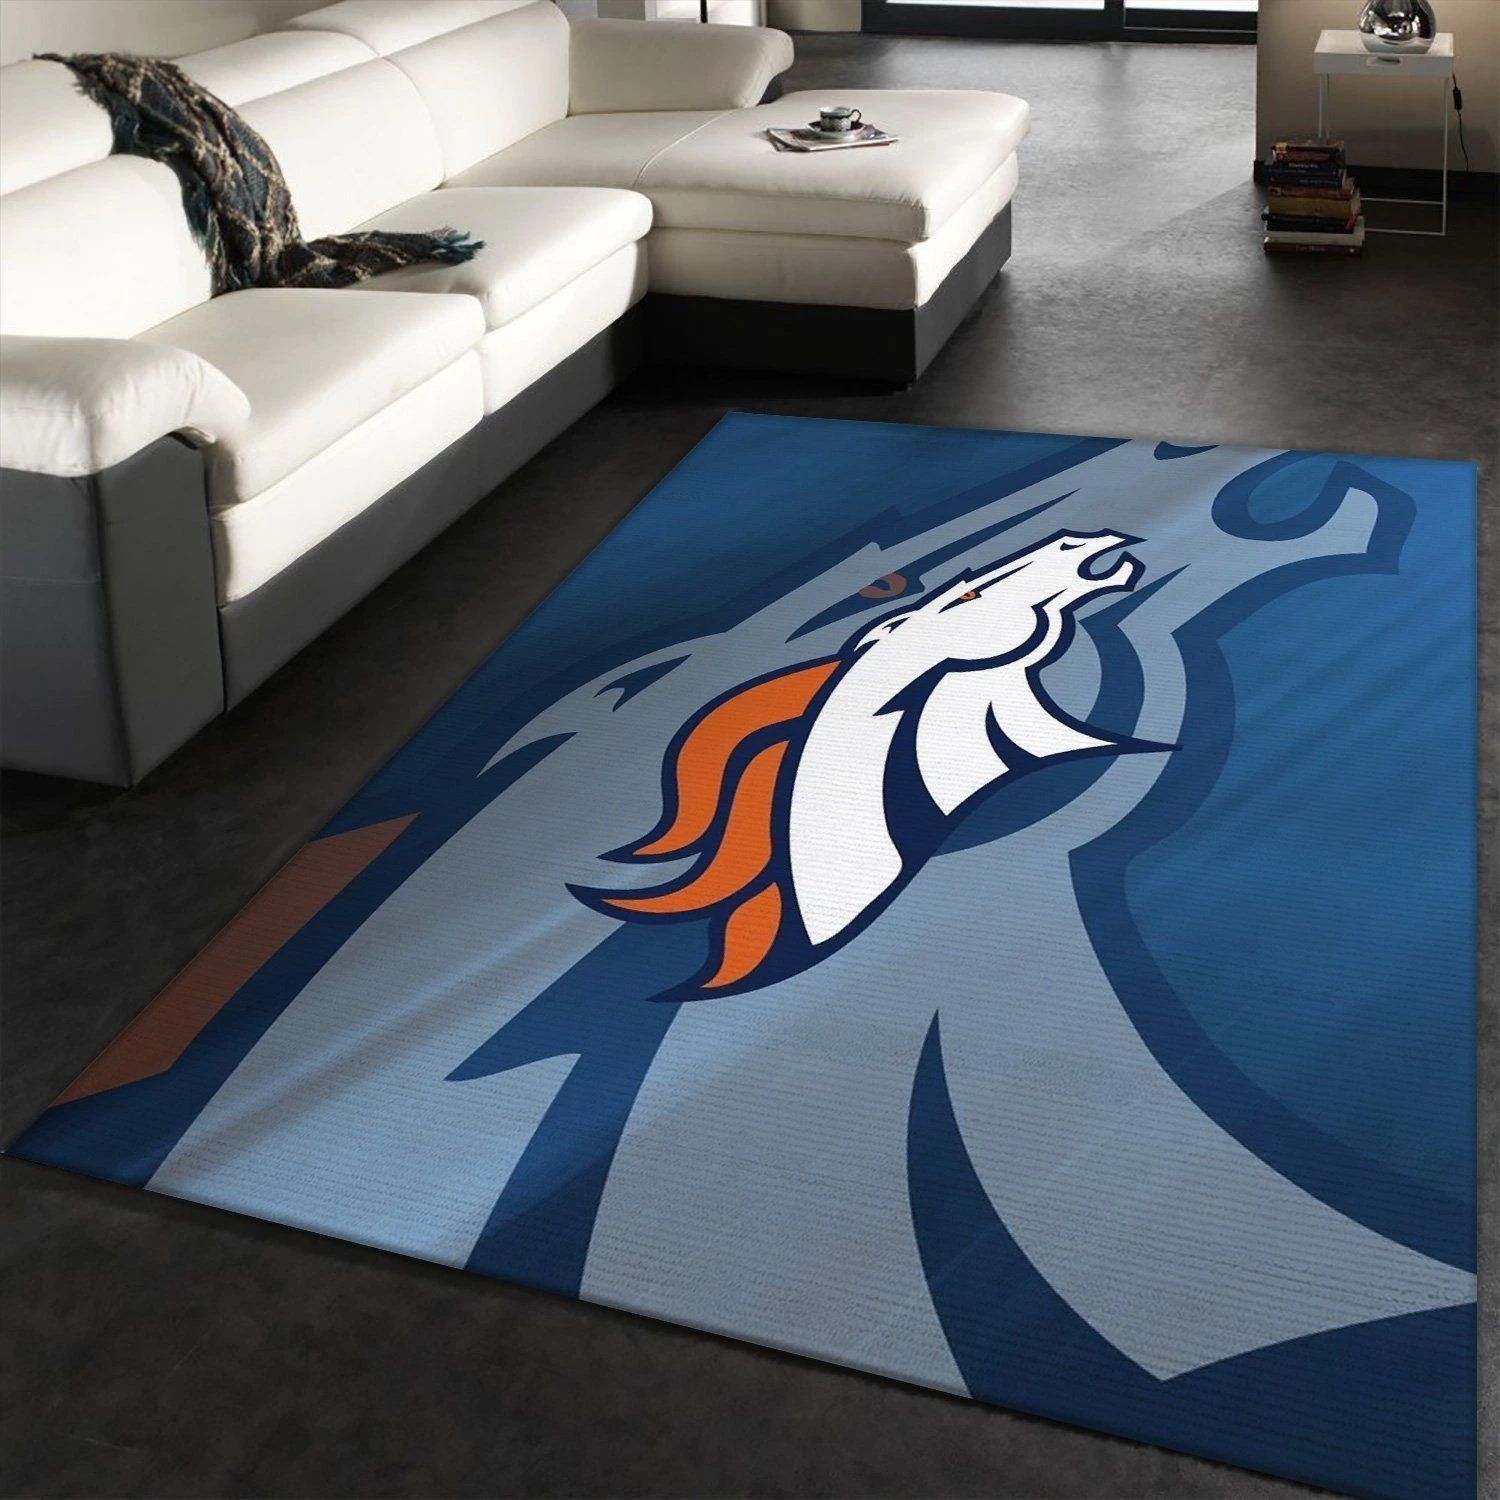 Denver Broncos Area Rugs Living Room Carpet SDB101201 Local Brands Floor Decor The US Decor - Indoor Outdoor Rugs